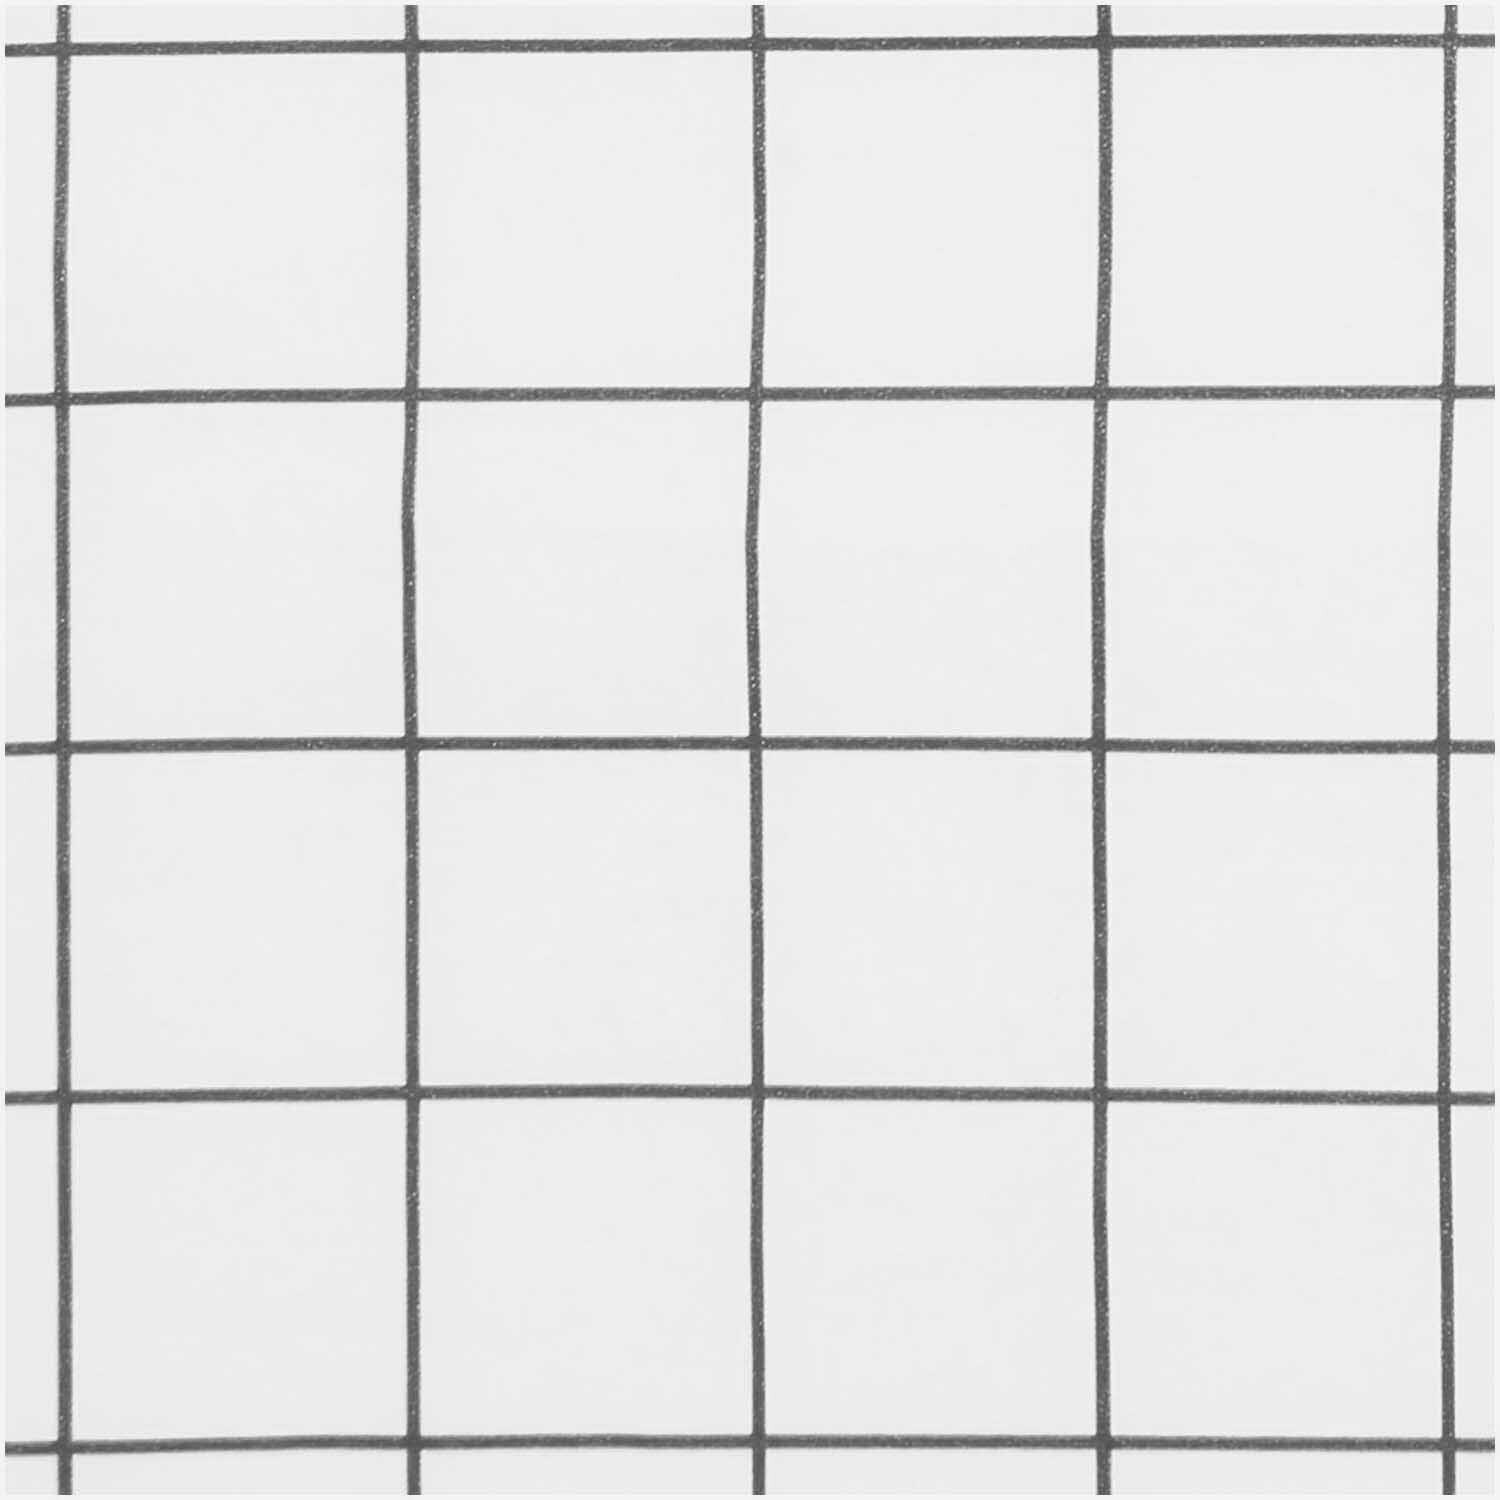 Paper Poetry Seidenpapier raster schwarz-weiß 50x70cm